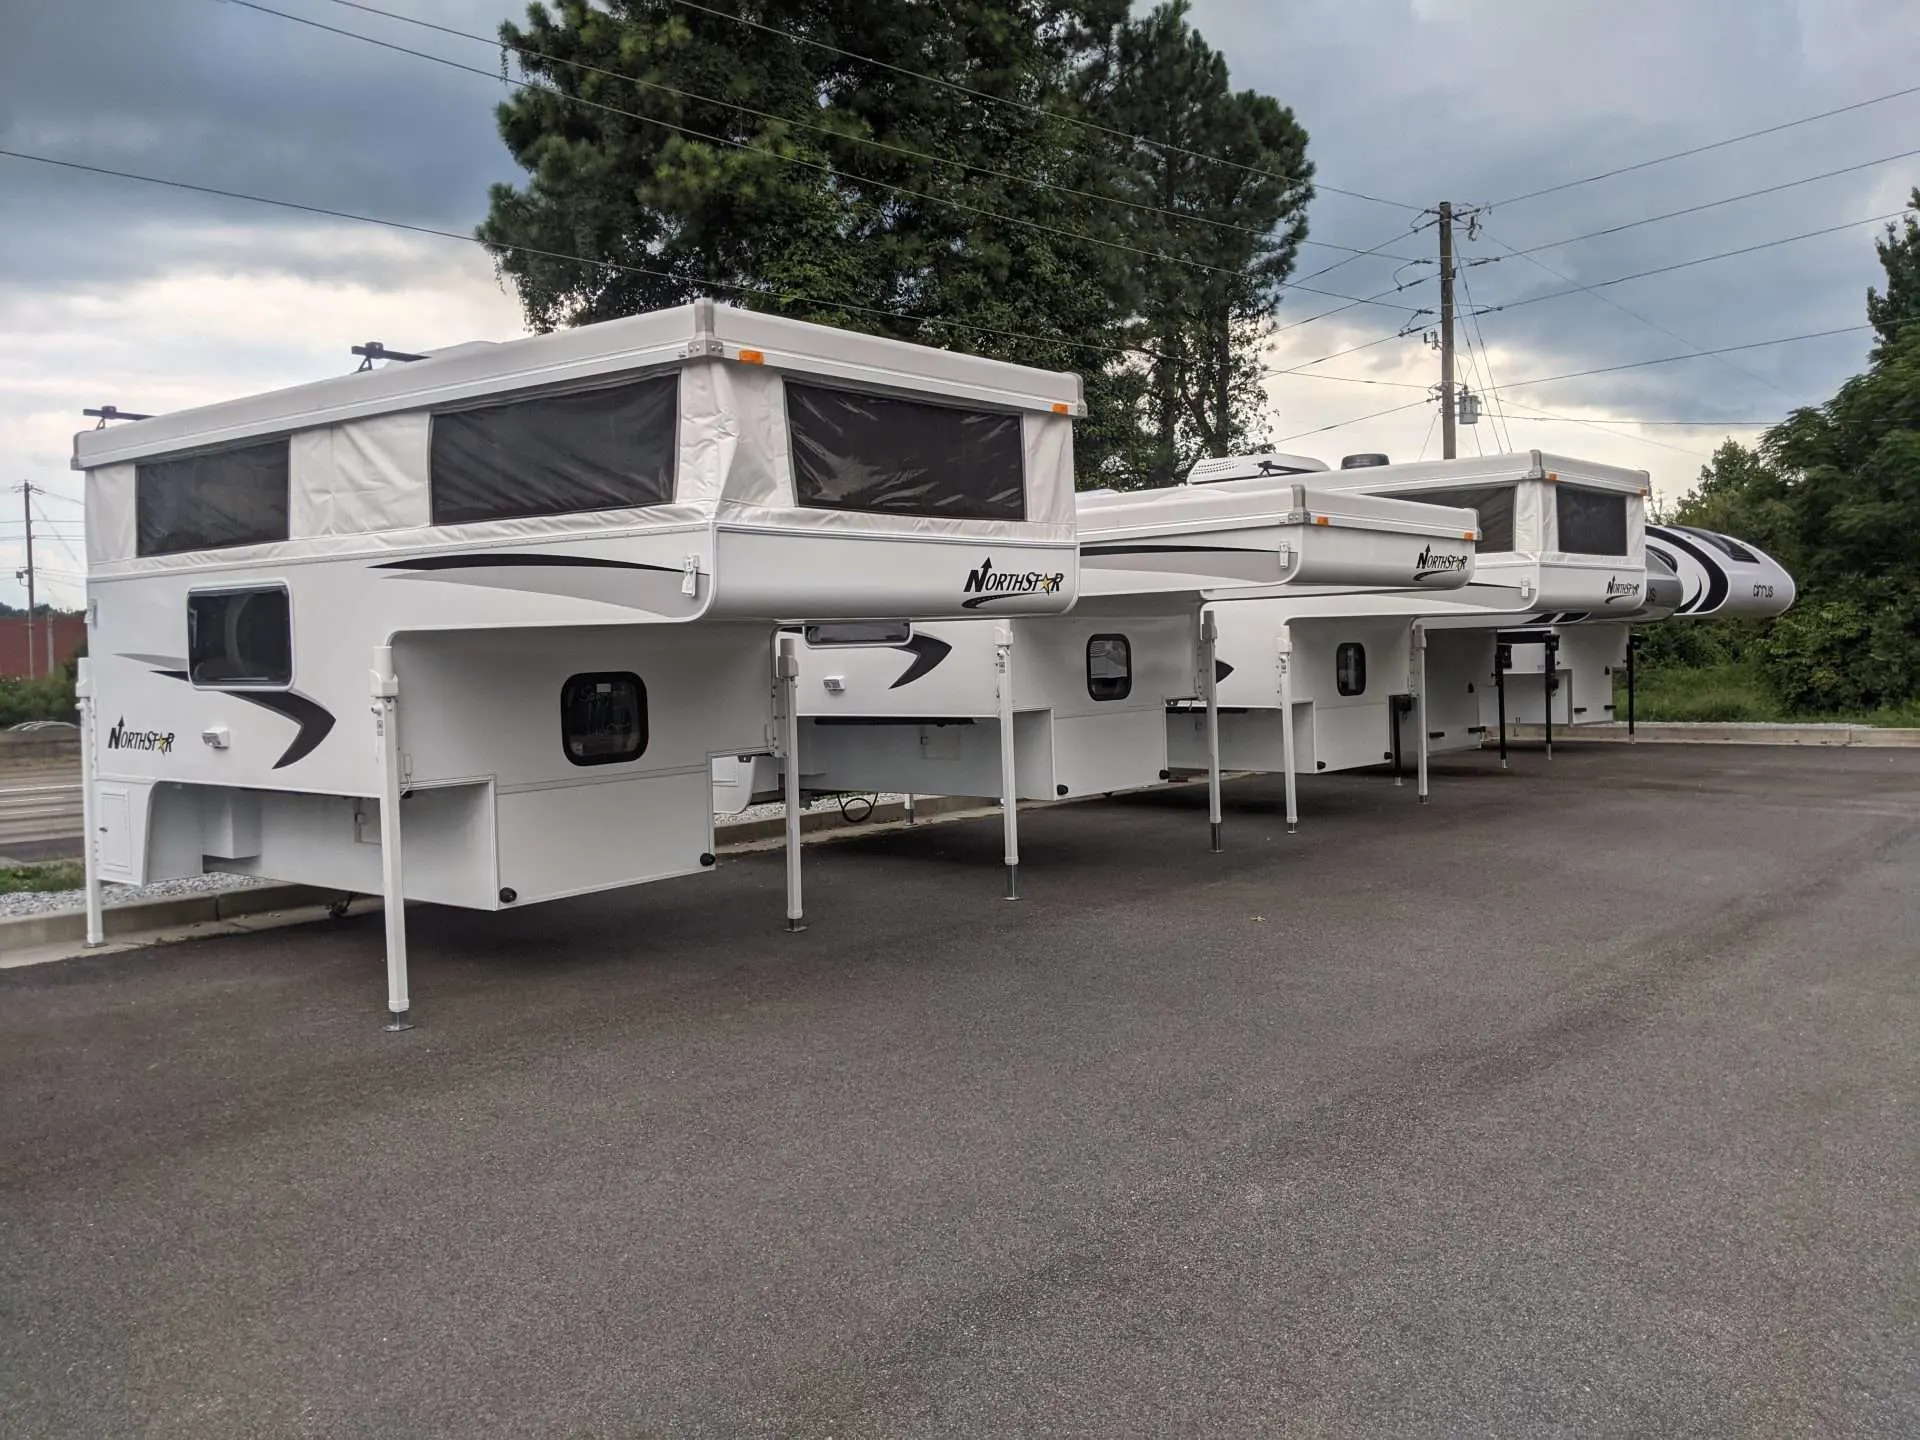 Northstar Campers in parking lot